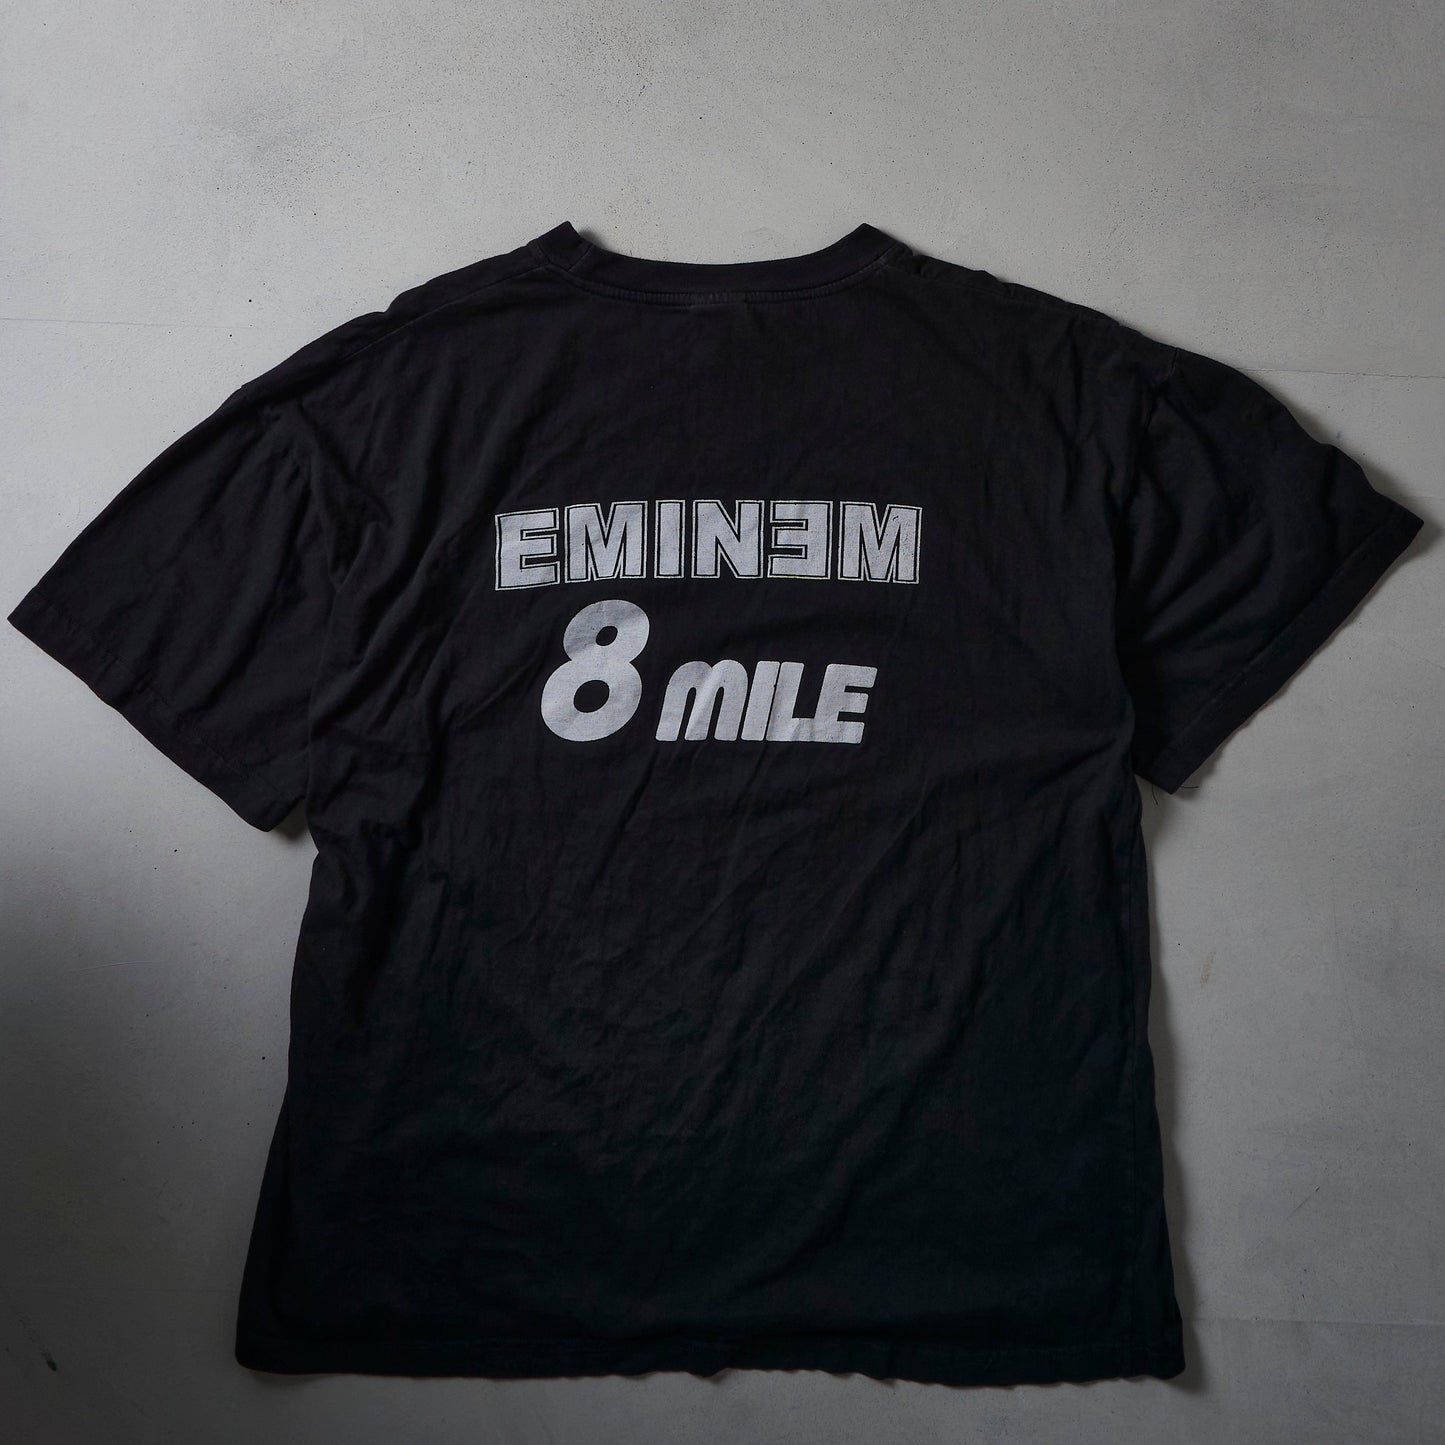 Vintage Eminem T-shirt